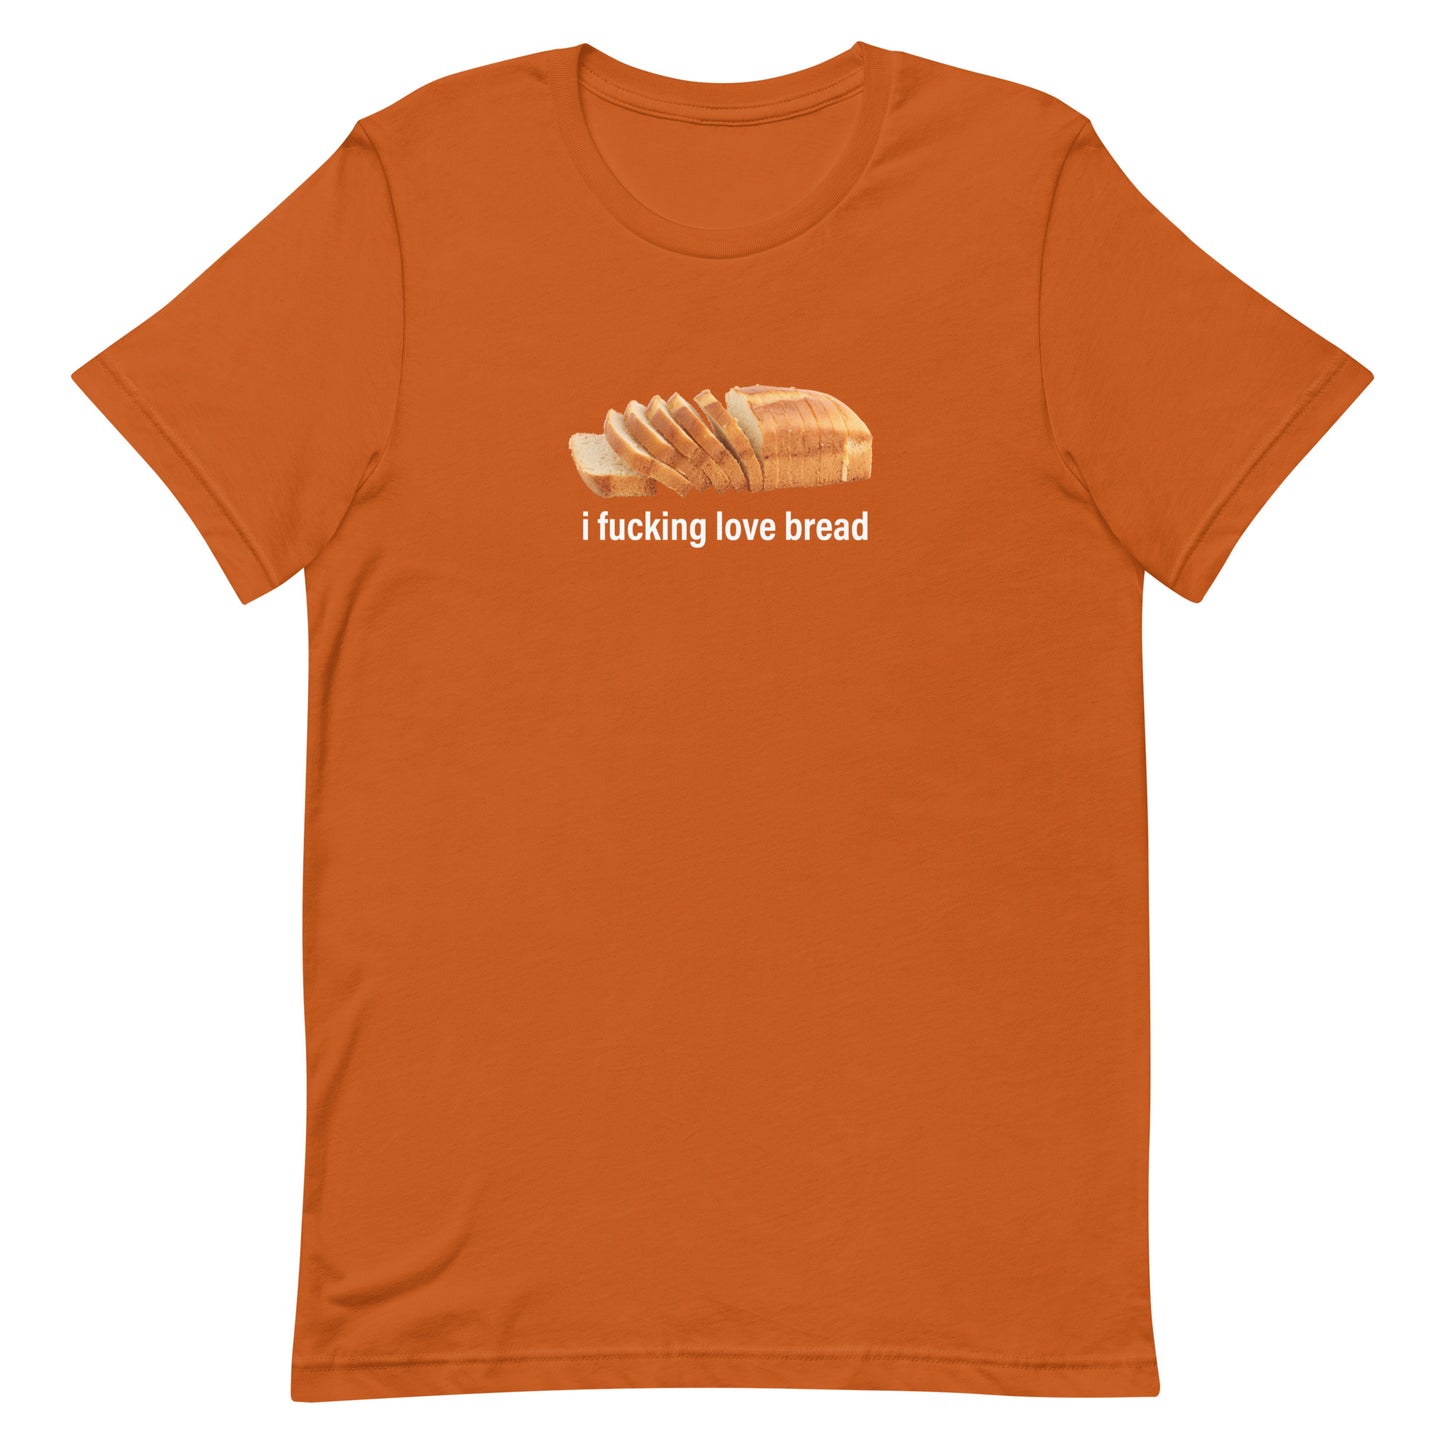 I Fucking Love Bread (Simple) Unisex t-shirt